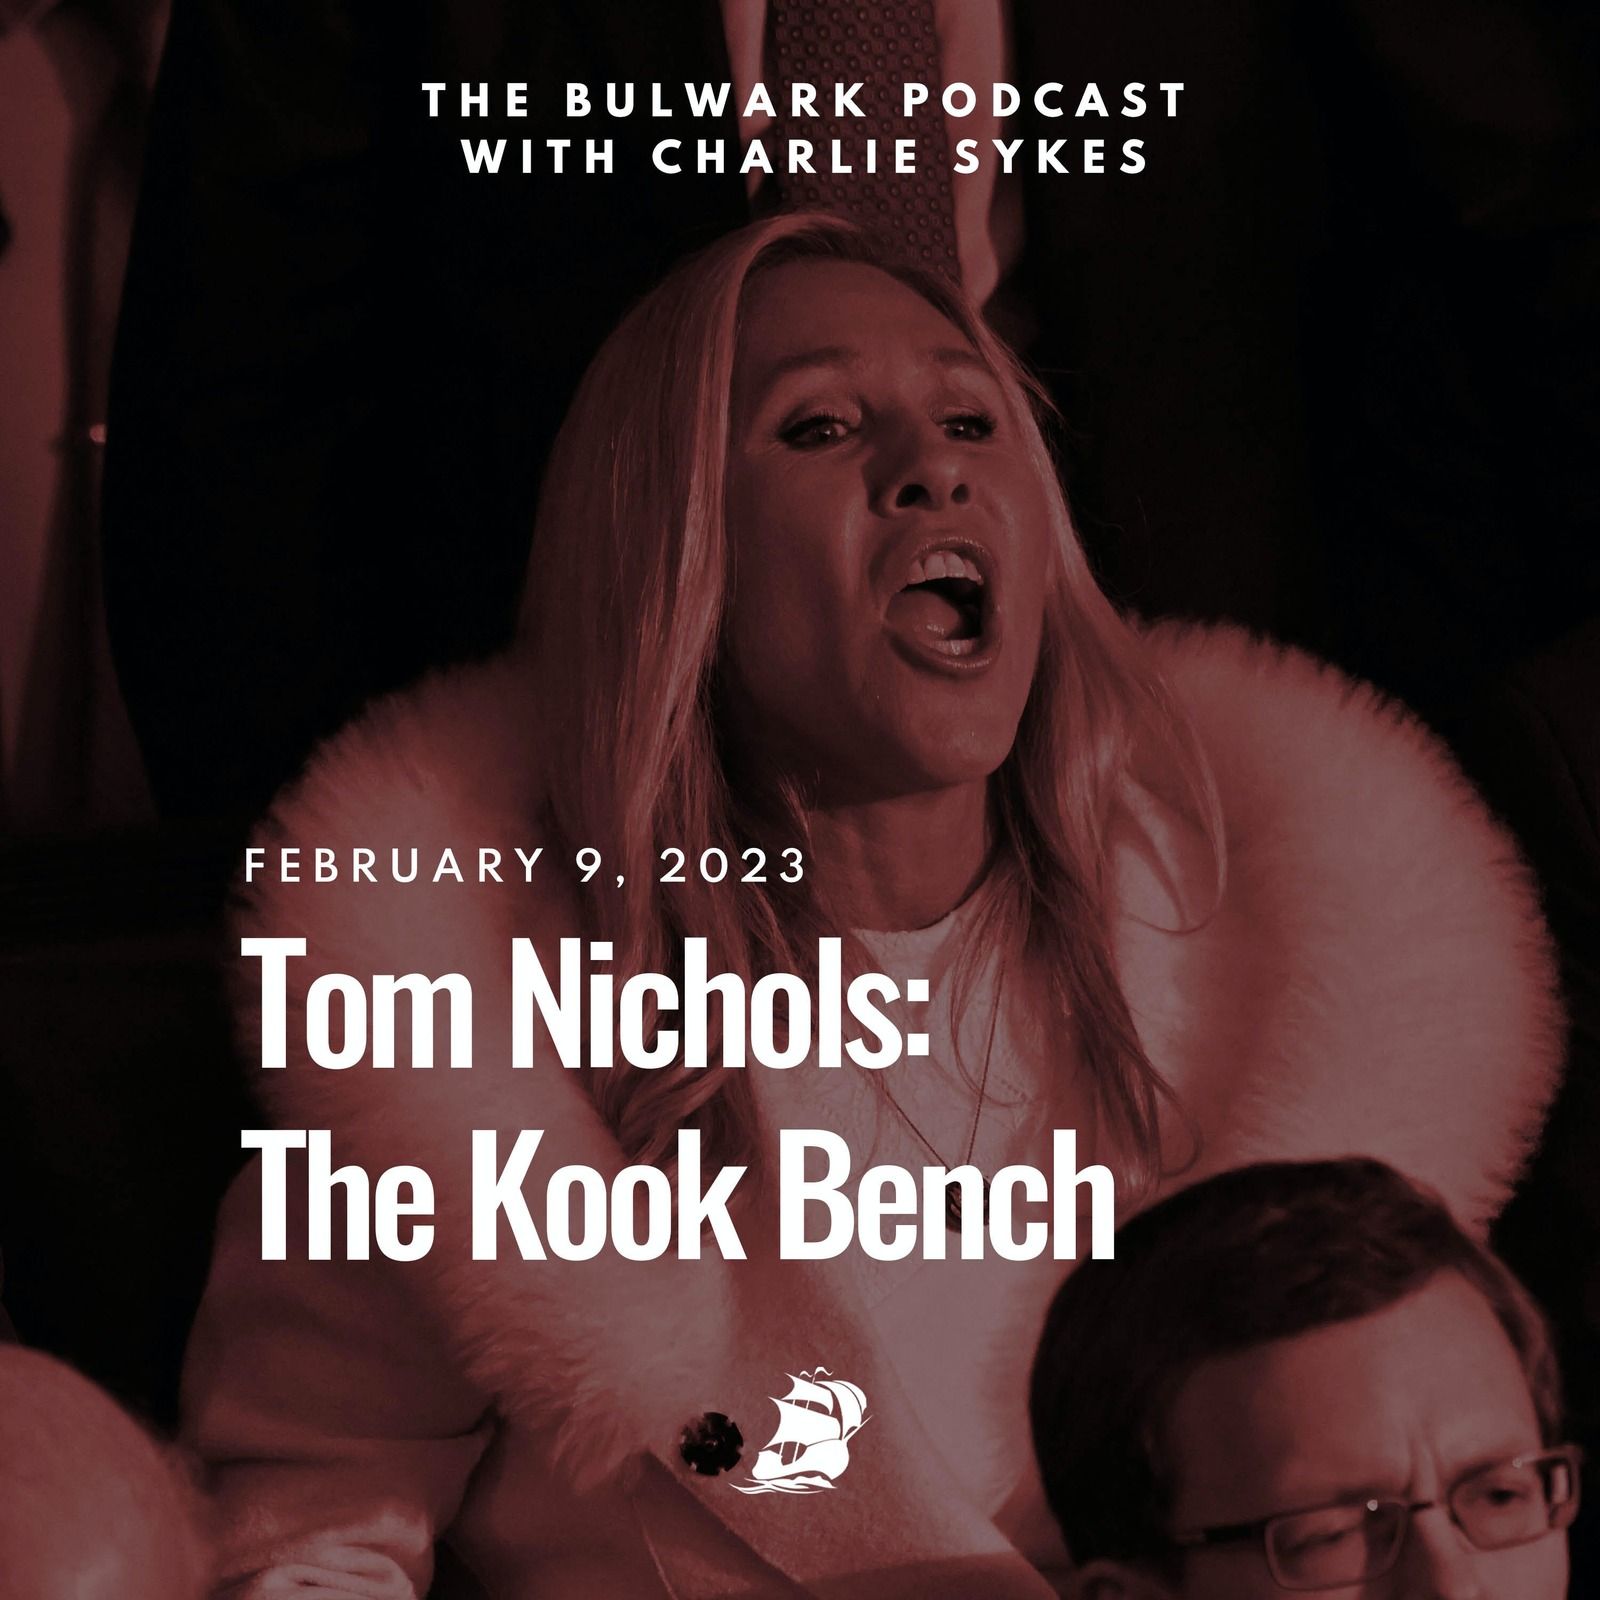 Tom Nichols: The Kook Bench